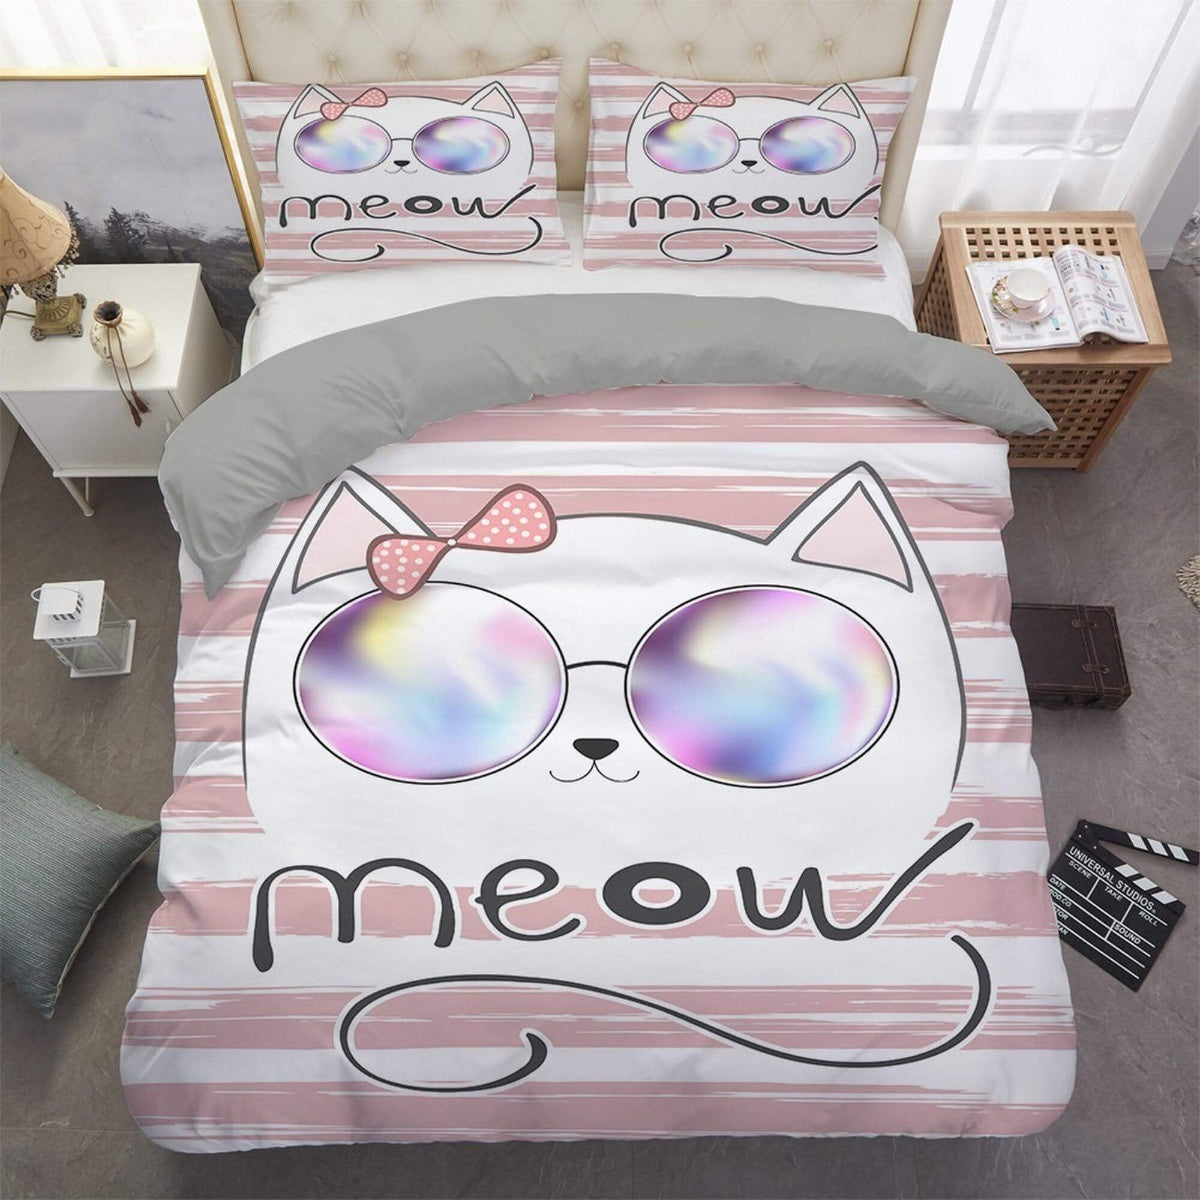 daintyduvet Girly cool cat bedding, toddler bedding, kids duvet cover set, gift for cat lovers, baby bedding, baby shower gift, pink bedding